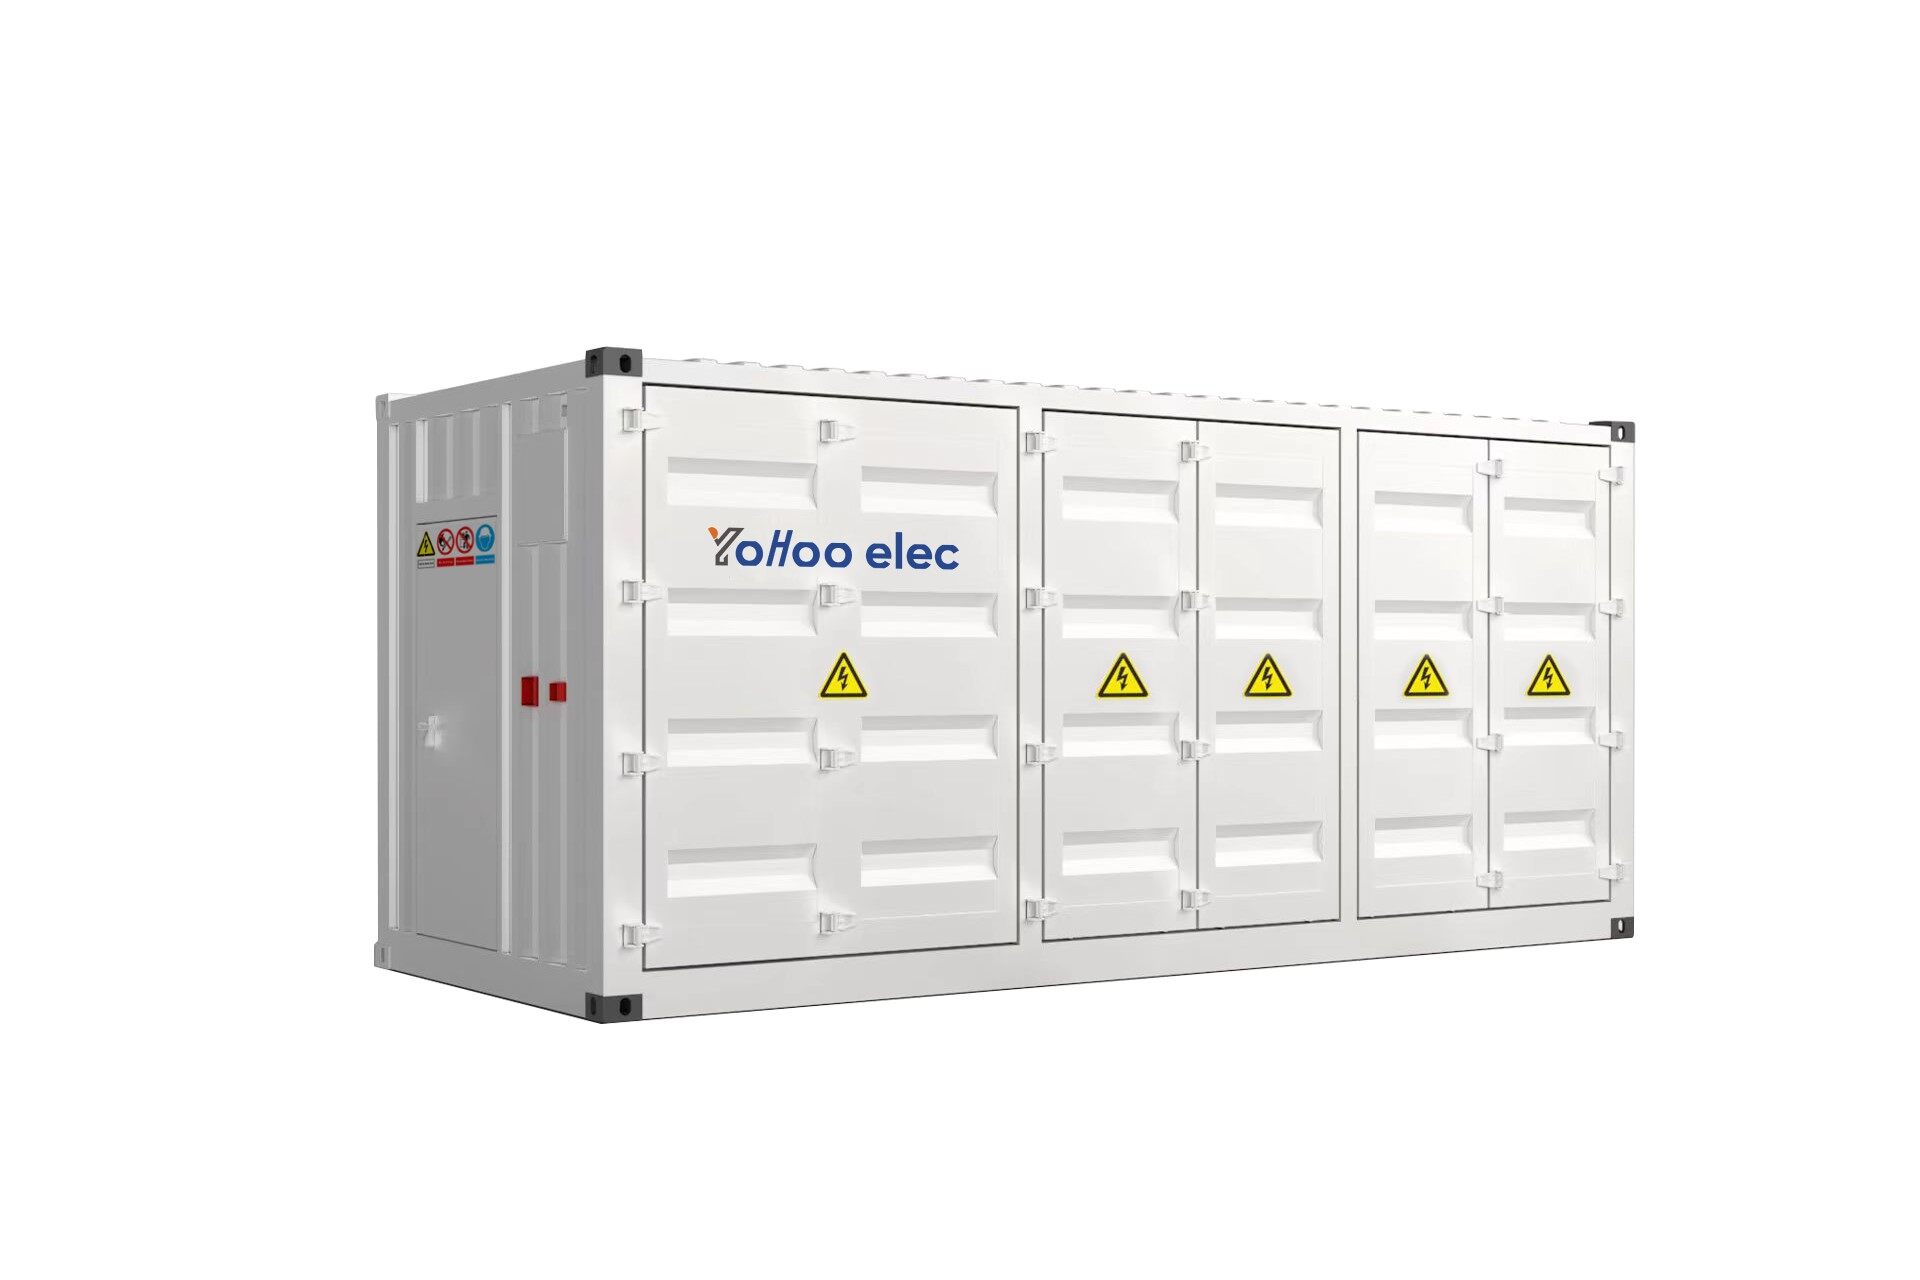 Yohoo Elec Container Energy Storage System